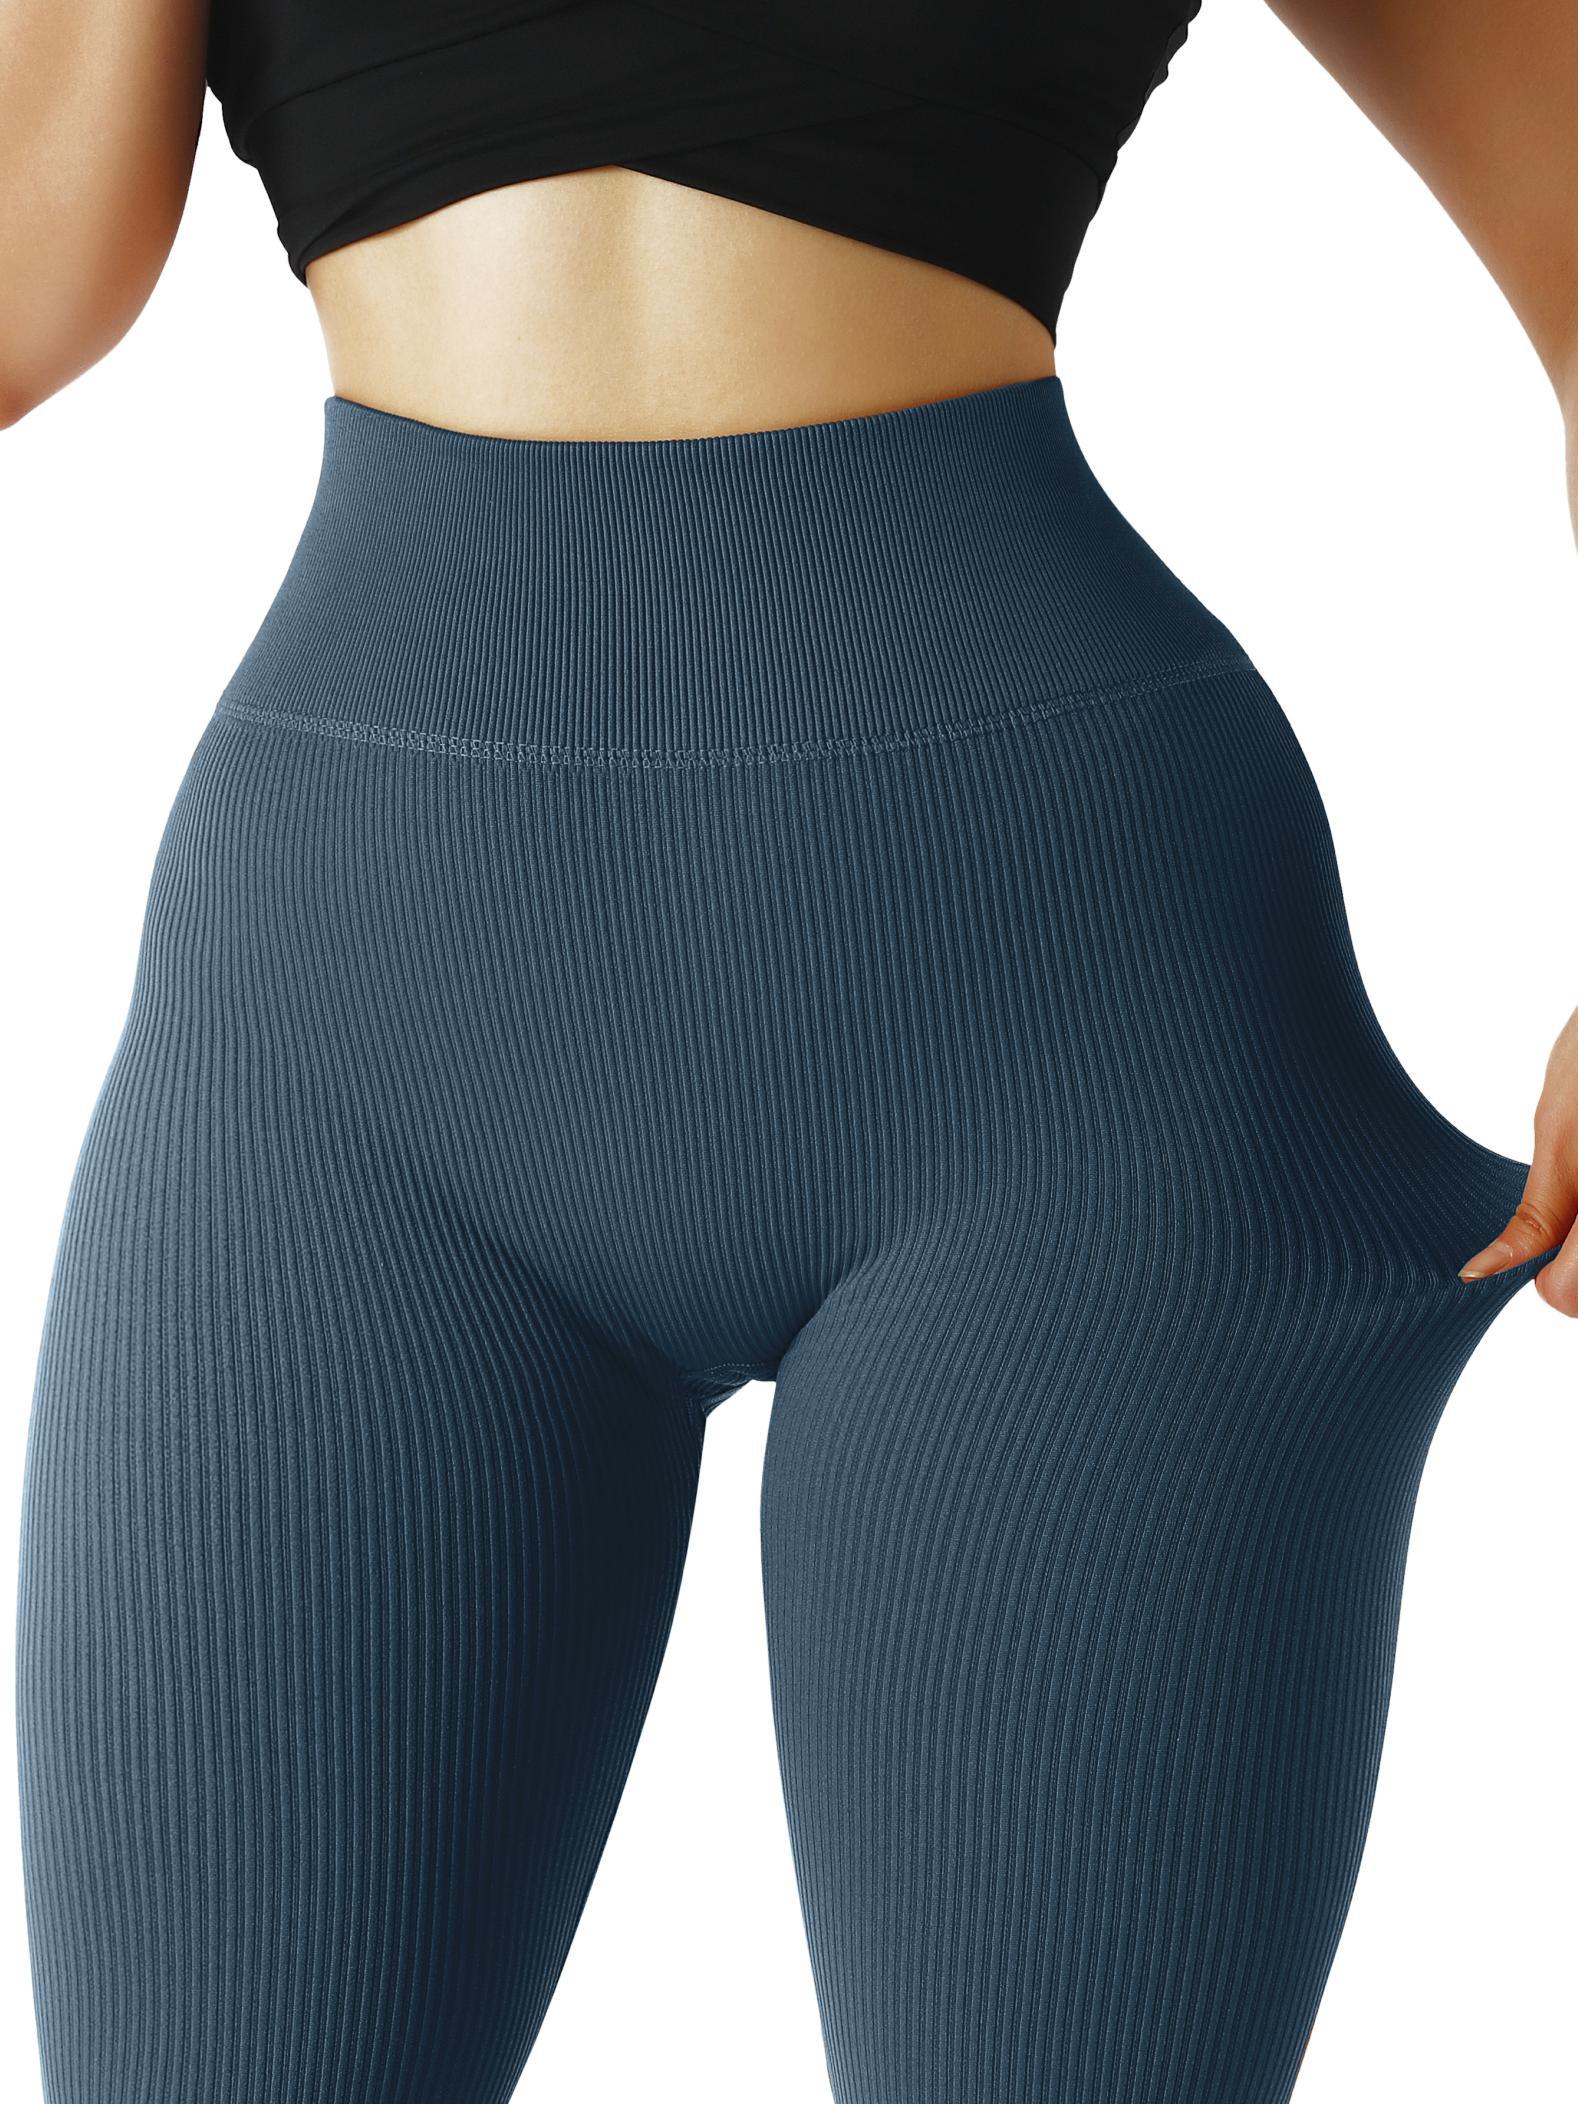 Dragon Fit, Pants & Jumpsuits, High Waist Yoga Leggings Lightweight Skiny  Tummy Control Workout Running Pants